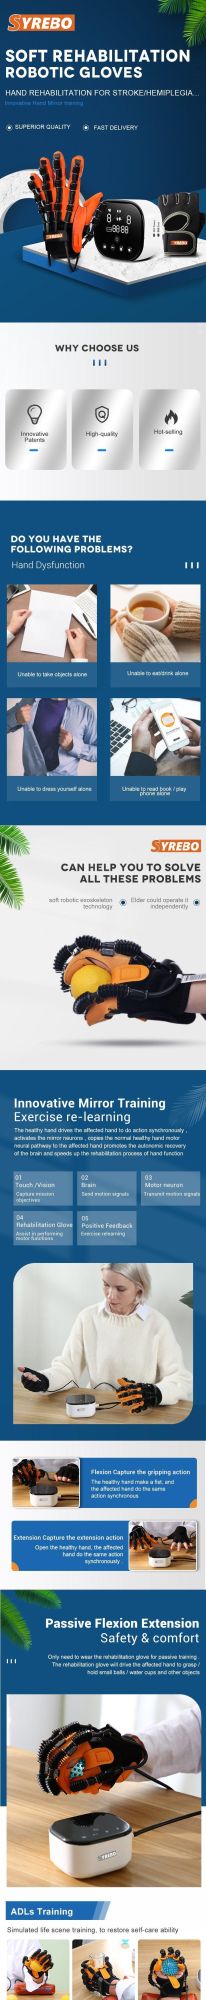 2022 New Hand Robotic Rehabilitation Equipment Rehabilitation System for Clinic